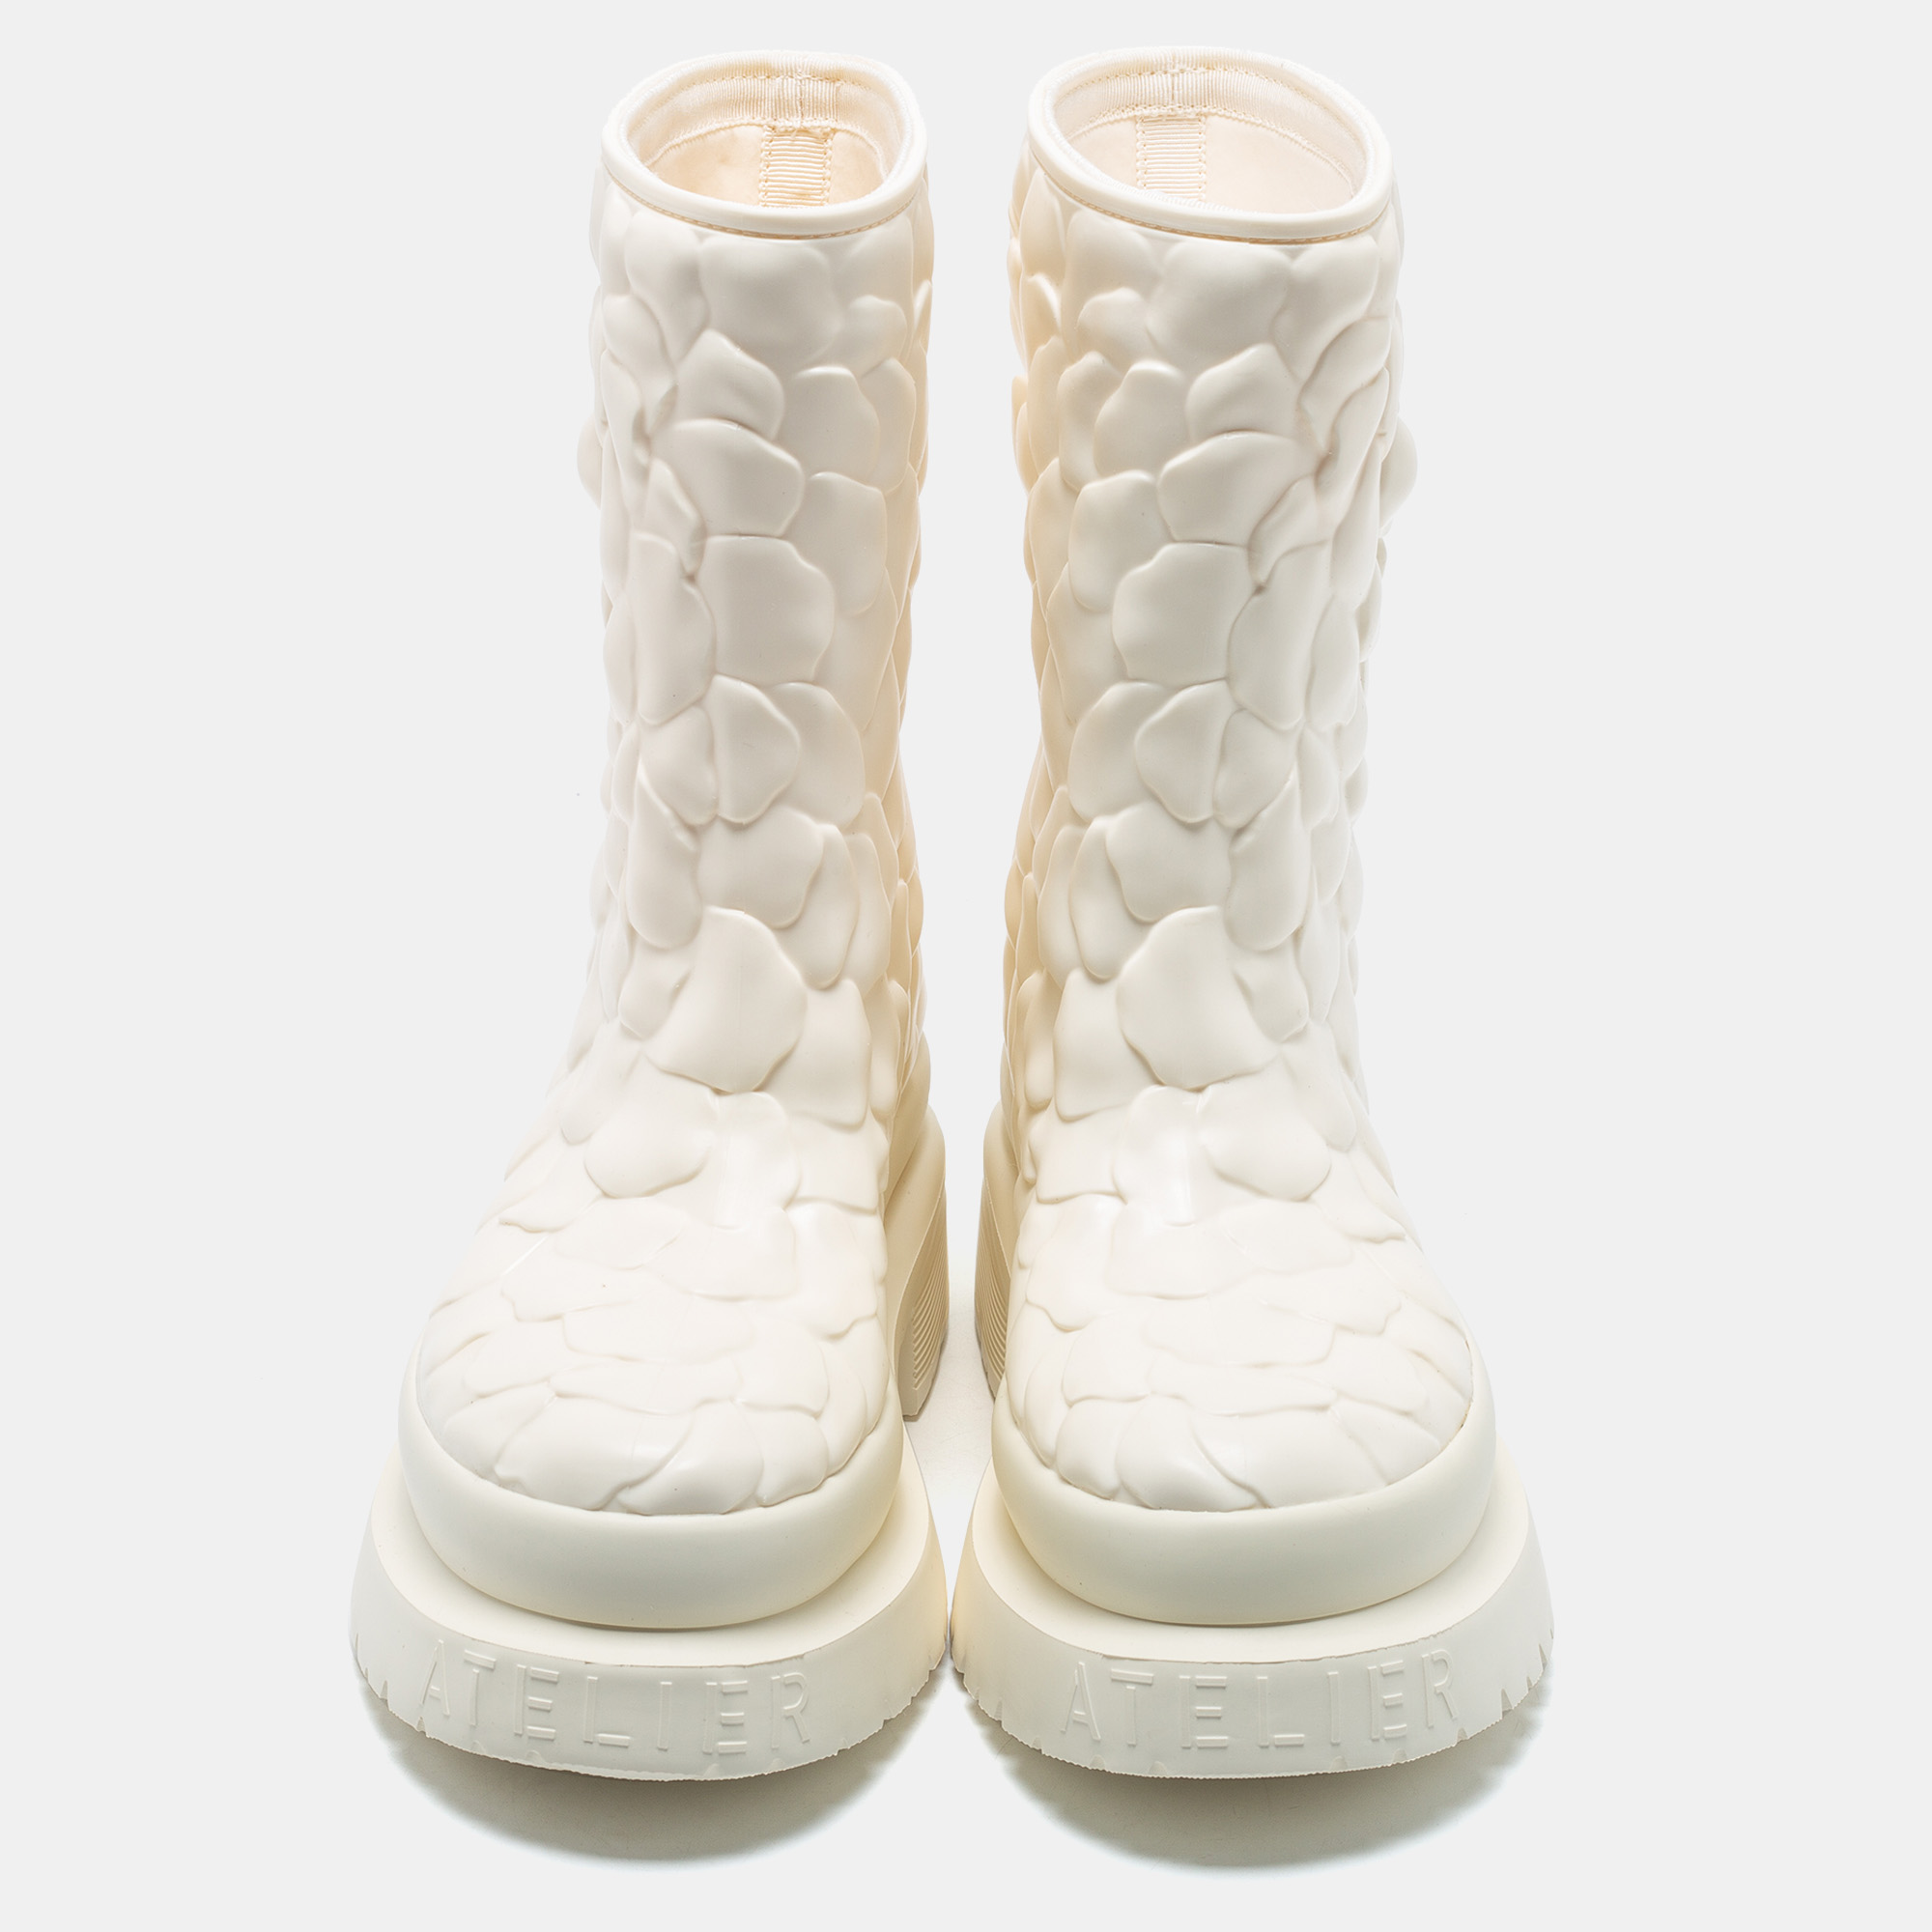 Atelier 03 Rose Edition Rain Boot in White - Valentino Garavani